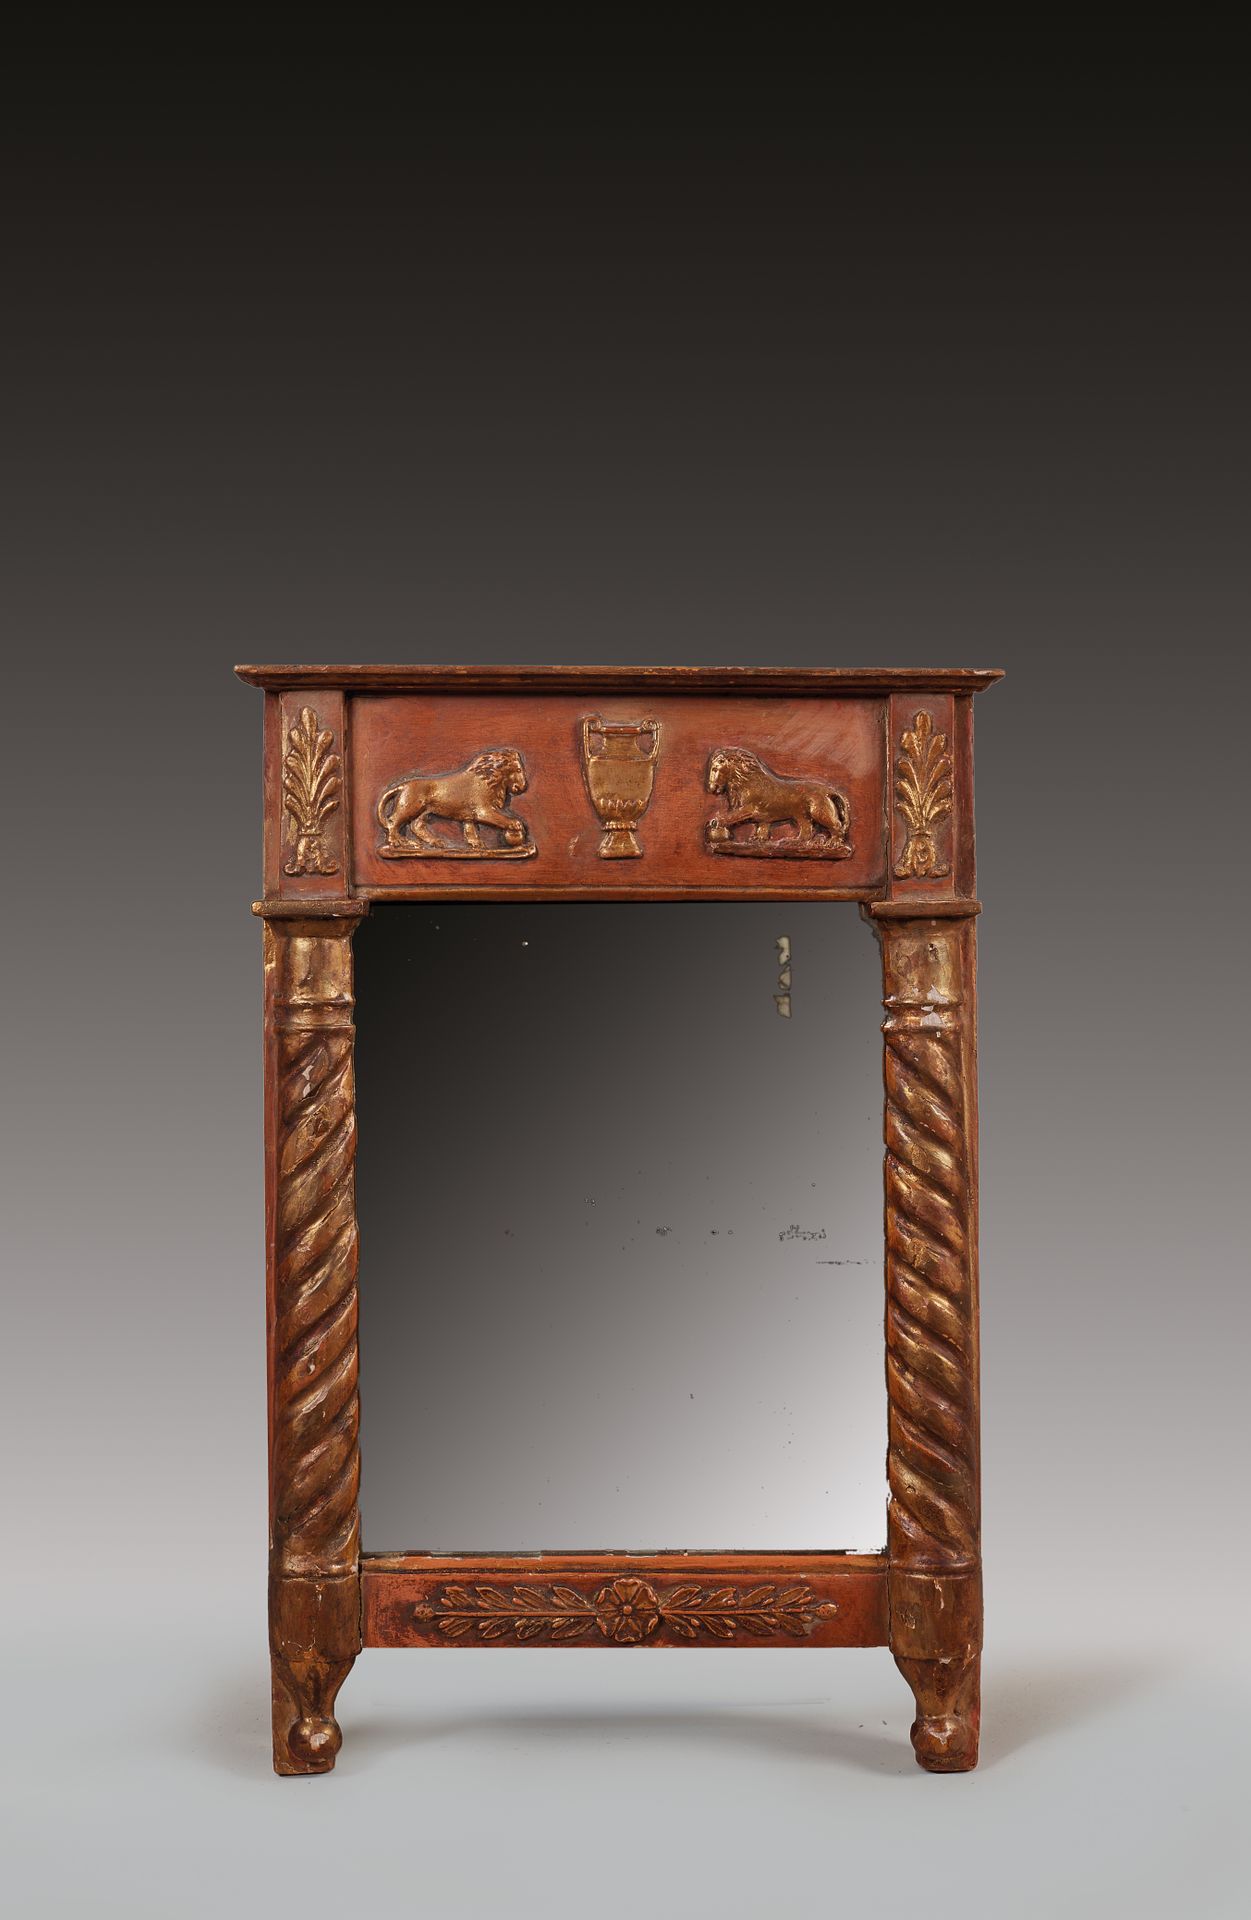 Null 长方形的镀金木窗，扭曲的柱子上装饰着两只狮子，框着一个安瓿瓶。

高度50 - 宽度35厘米